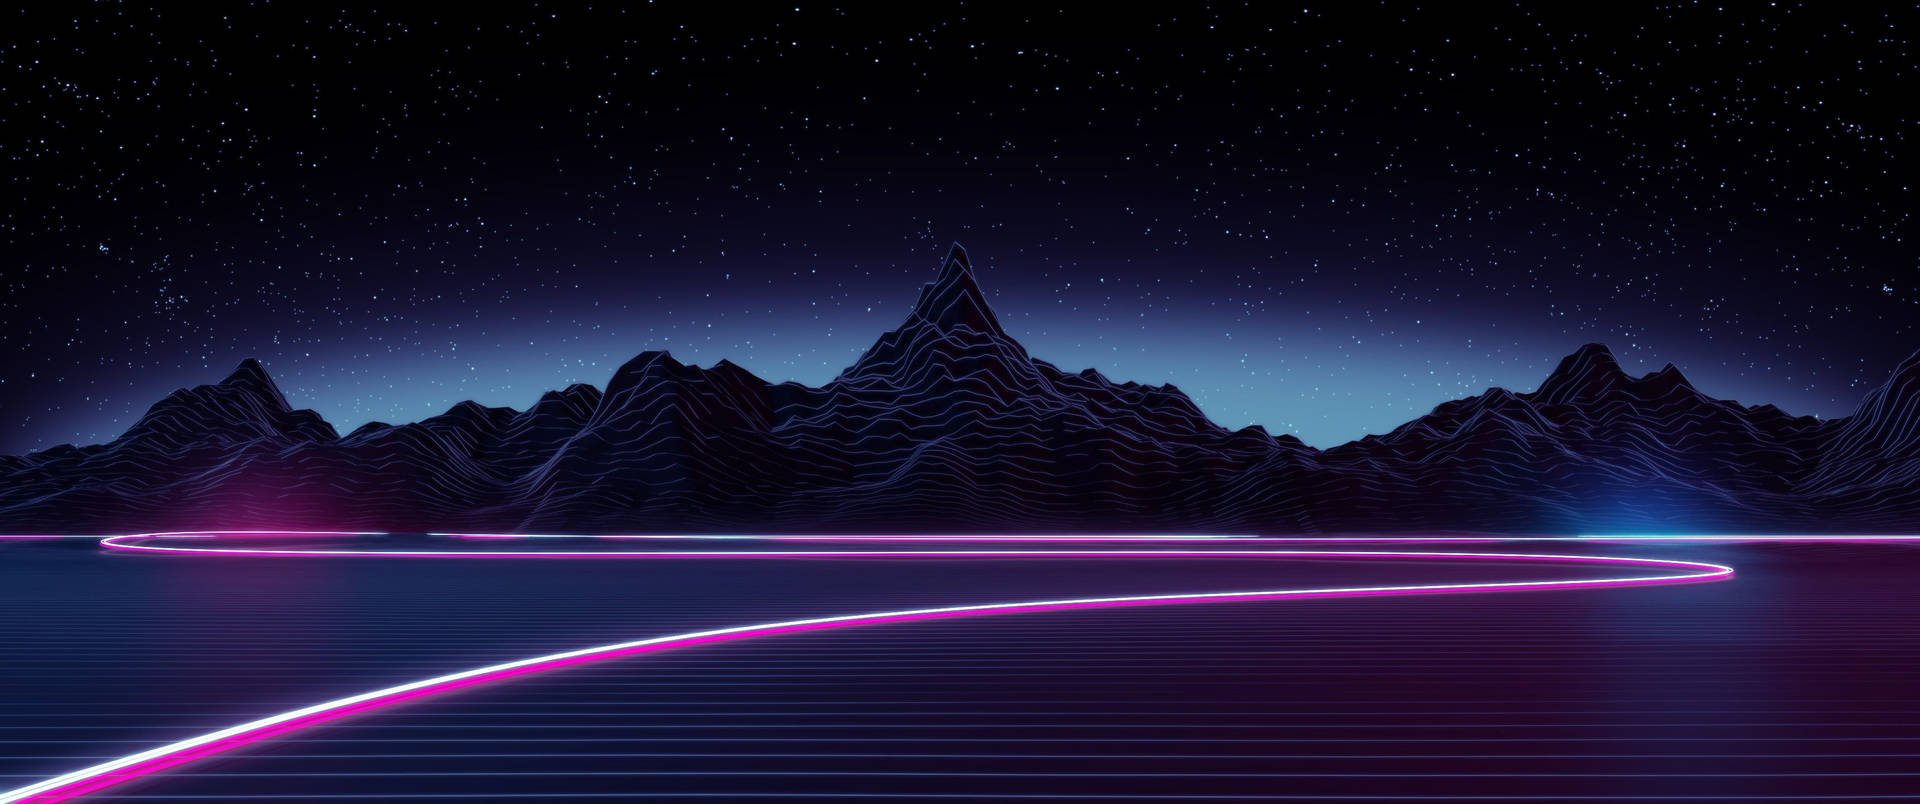 Neon Purple Aesthetic Mountain Road Background